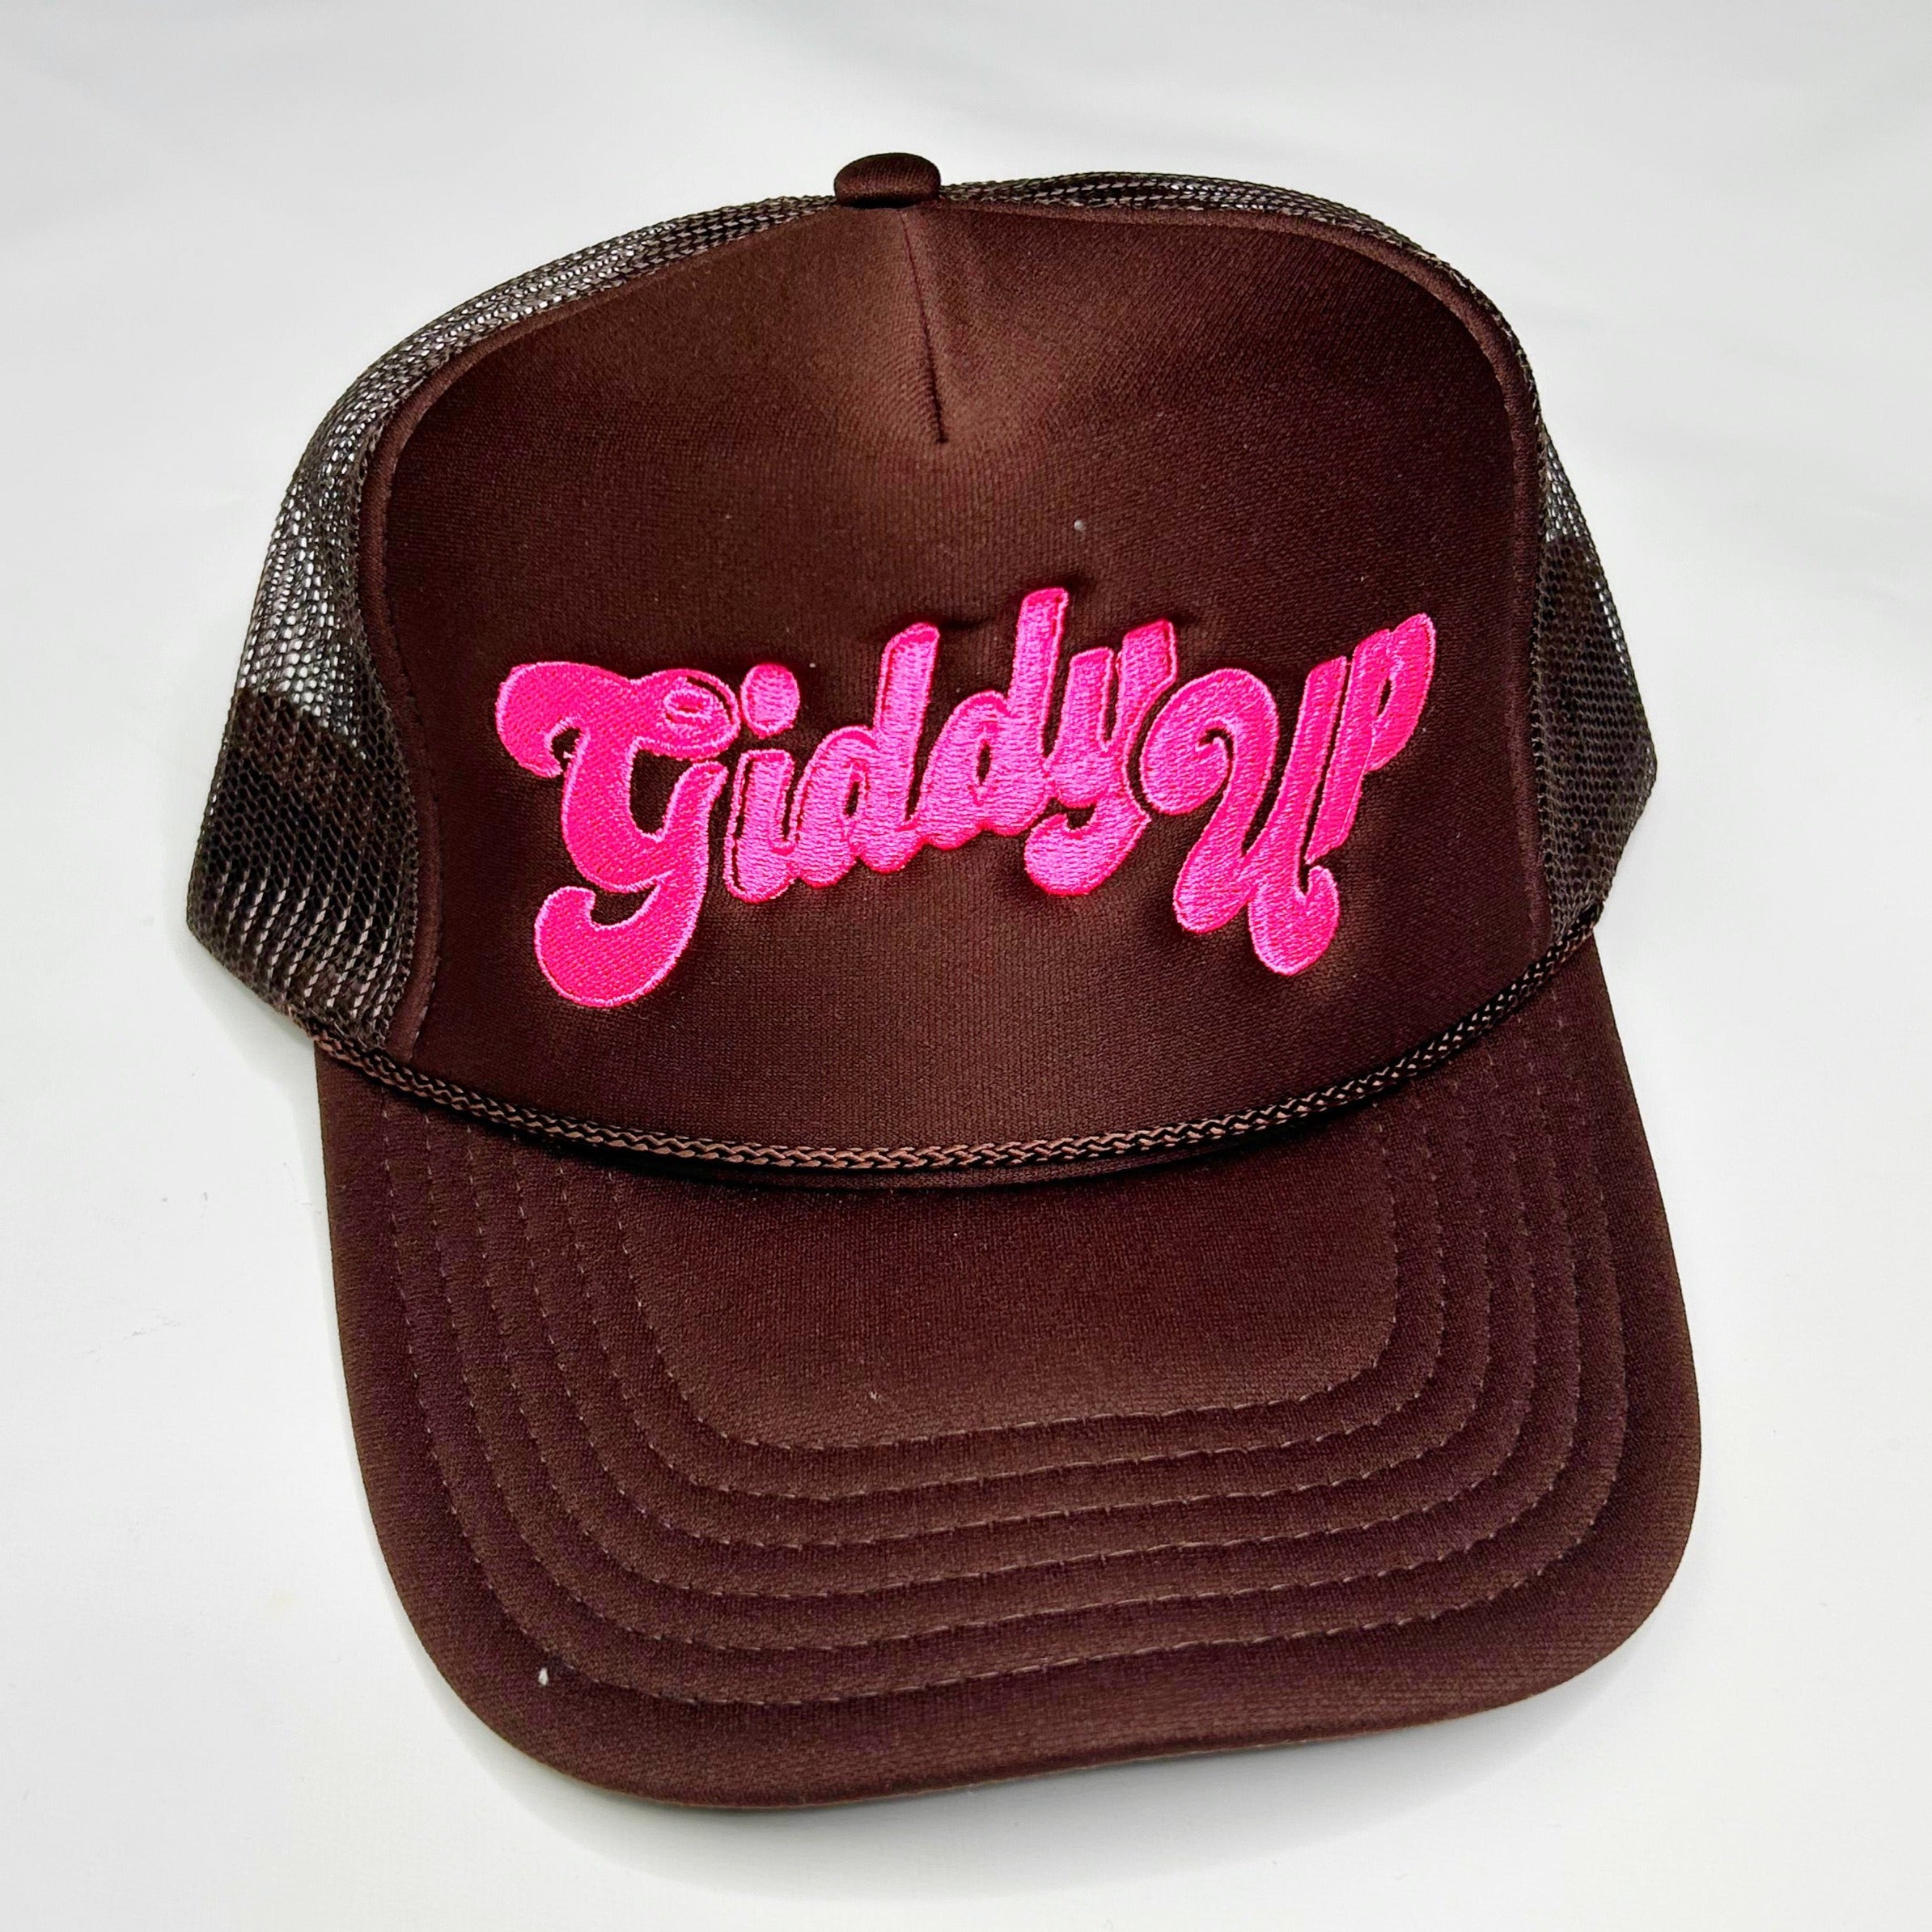 Giddy Up Trucker Hat